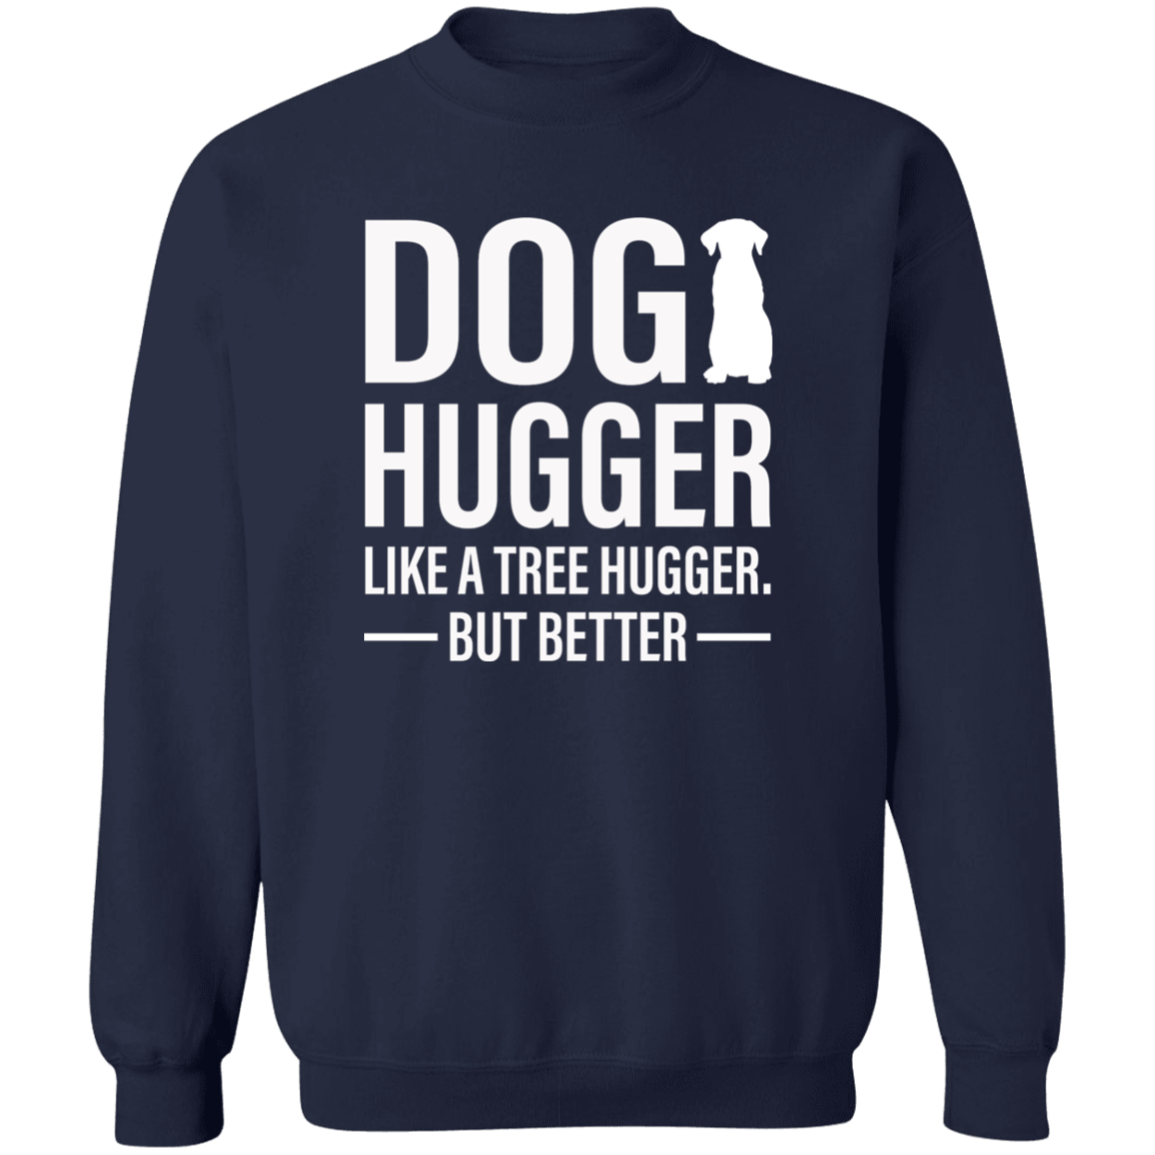 Dog Hugger - Sweatshirt.